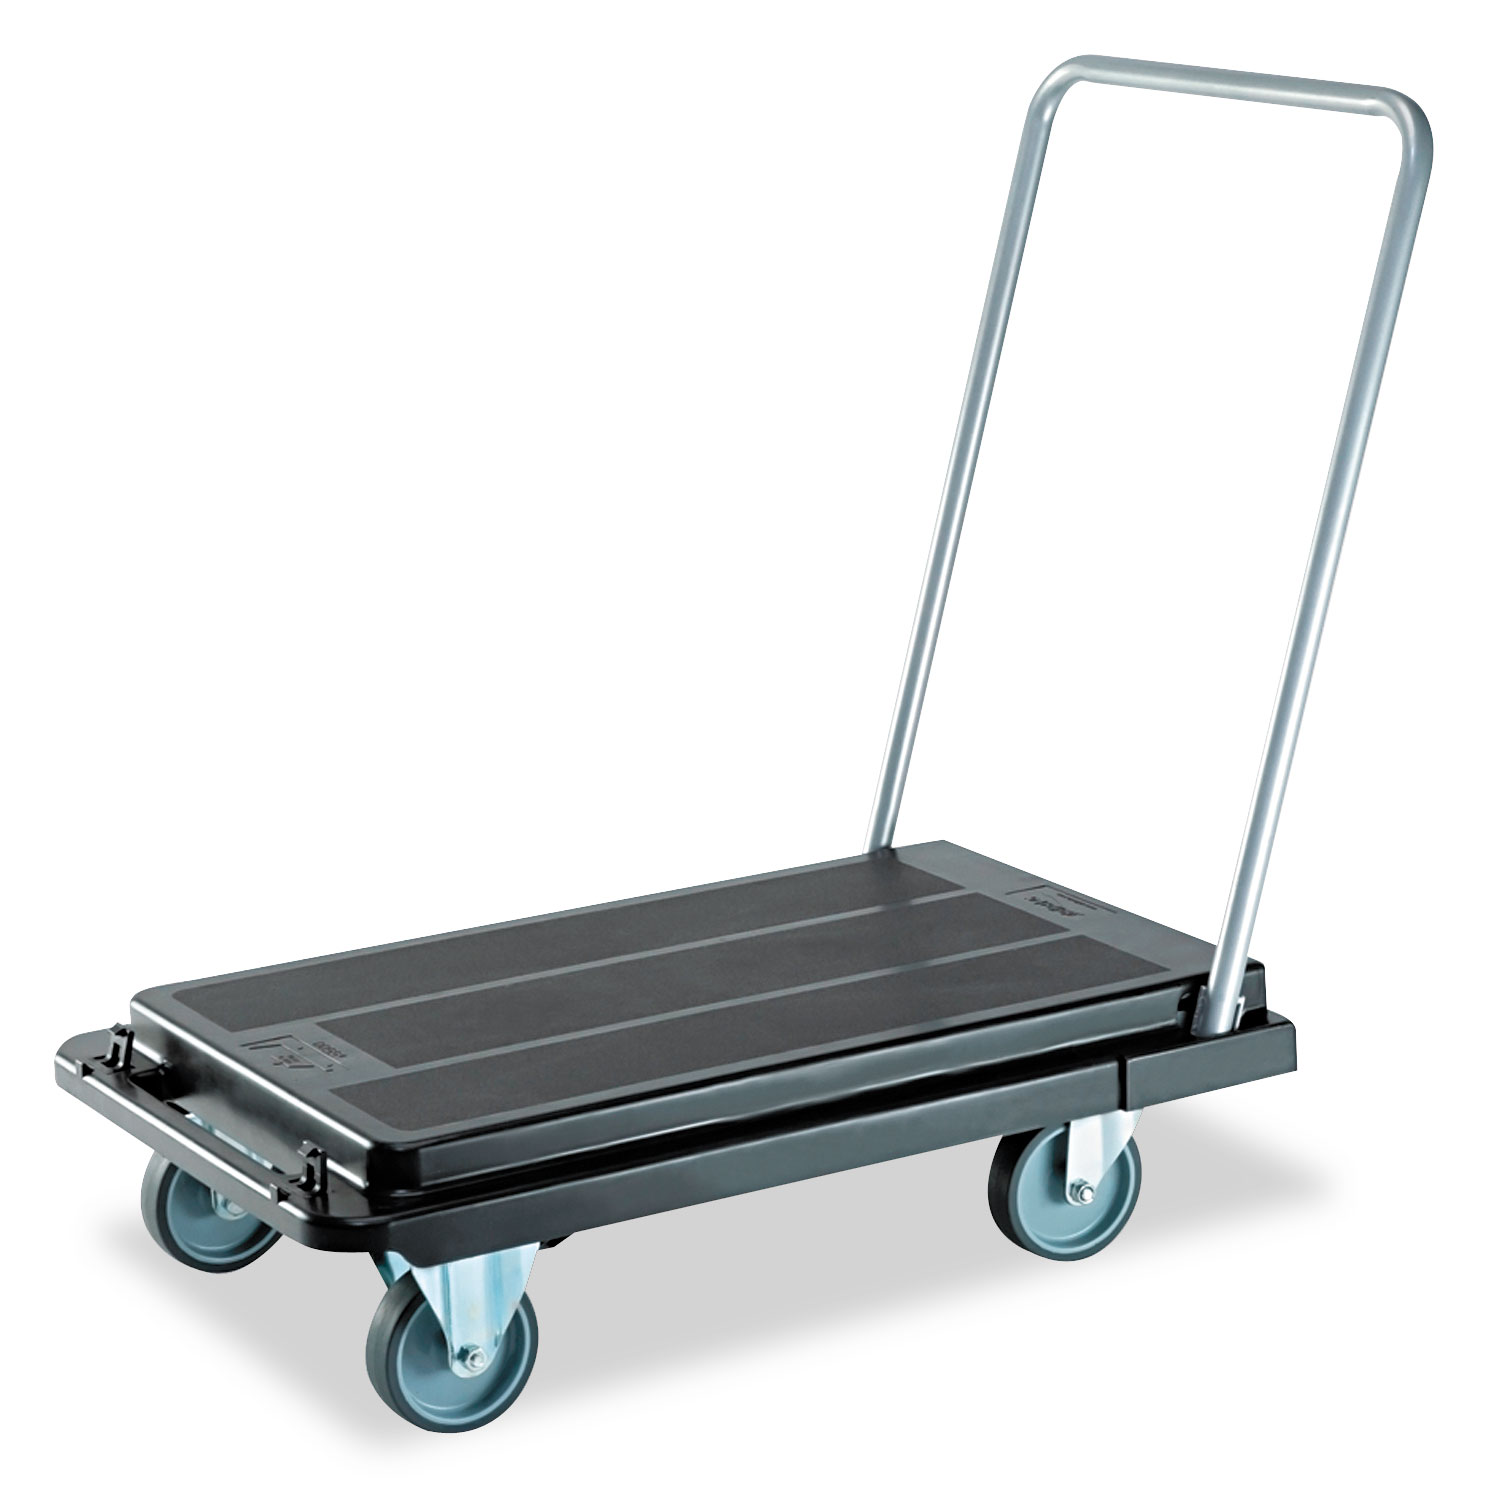  deflecto CRT5500-04 Heavy-Duty Platform Cart, 500 lb Capacity, 21 x 32.5 x 37.5, Black (DEFCRT550004) 